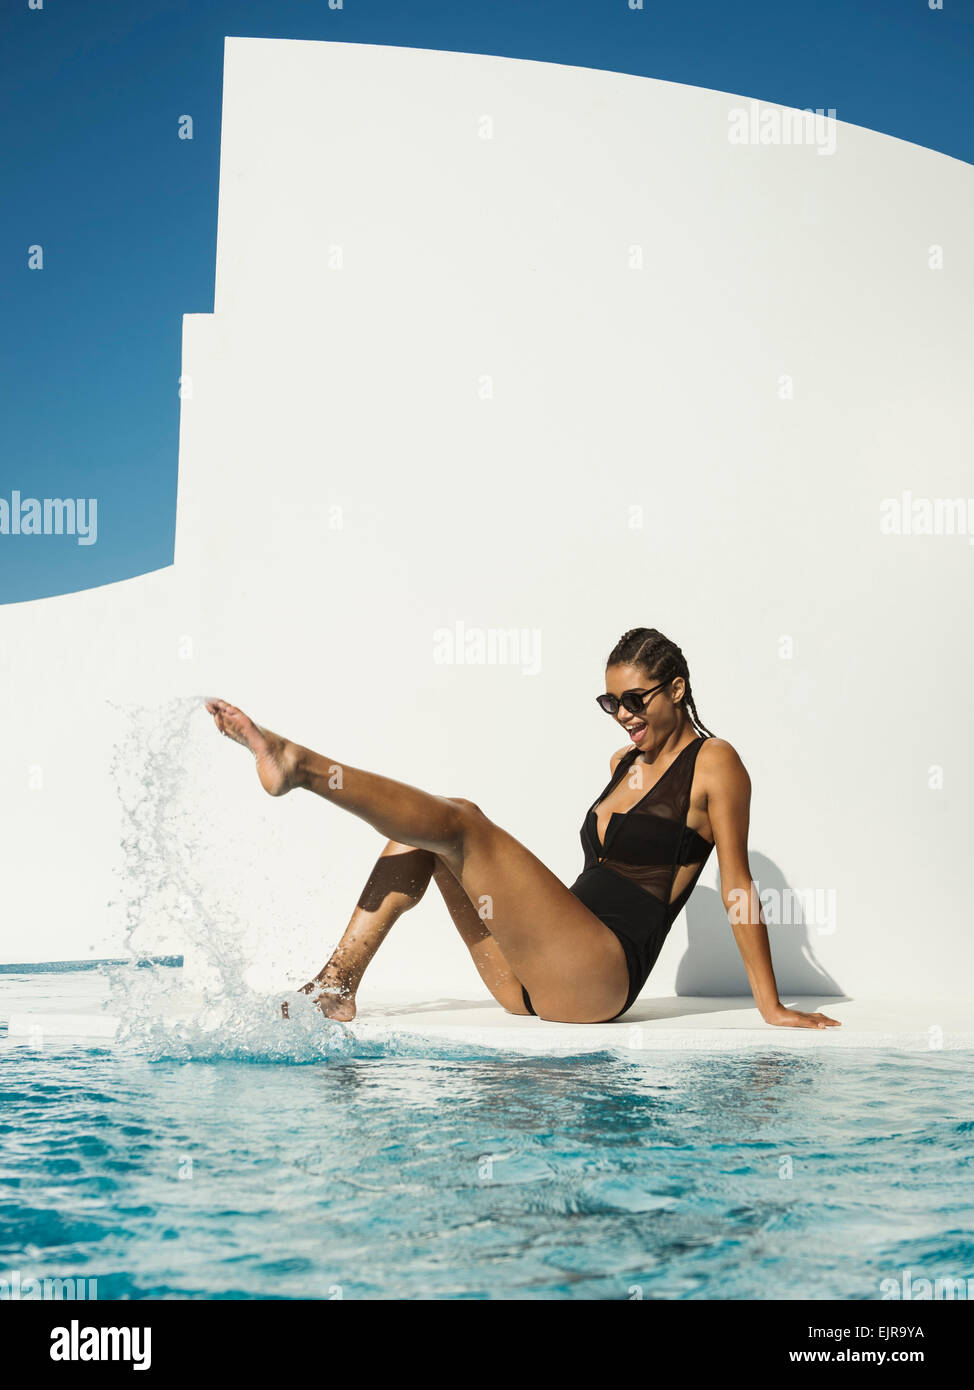 Mixed race woman in swimsuit splashing in swimming pool Stock Photo